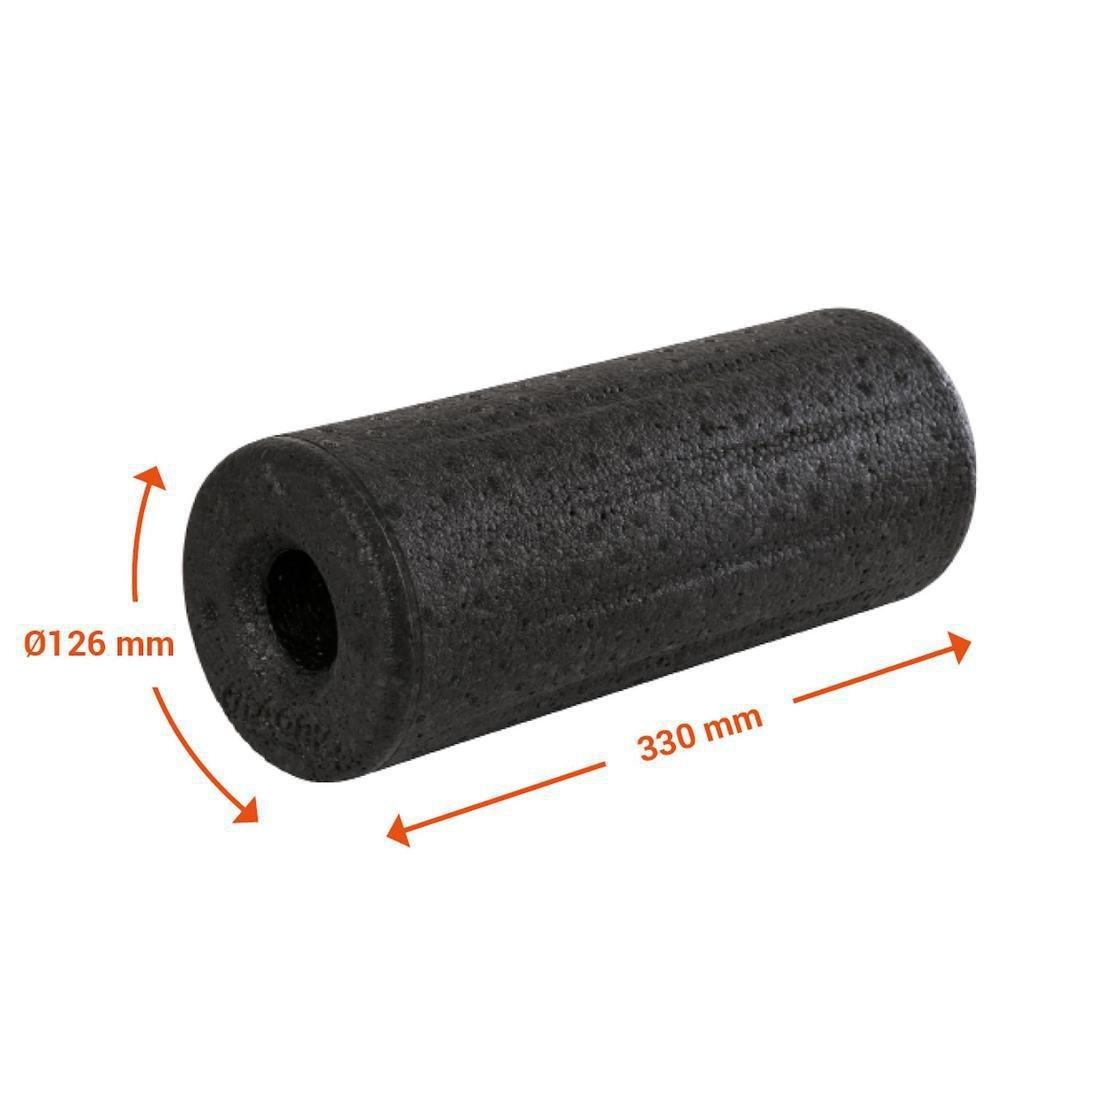 DECATHLON - 100 Soft Massage Roller Foam Roller, Black